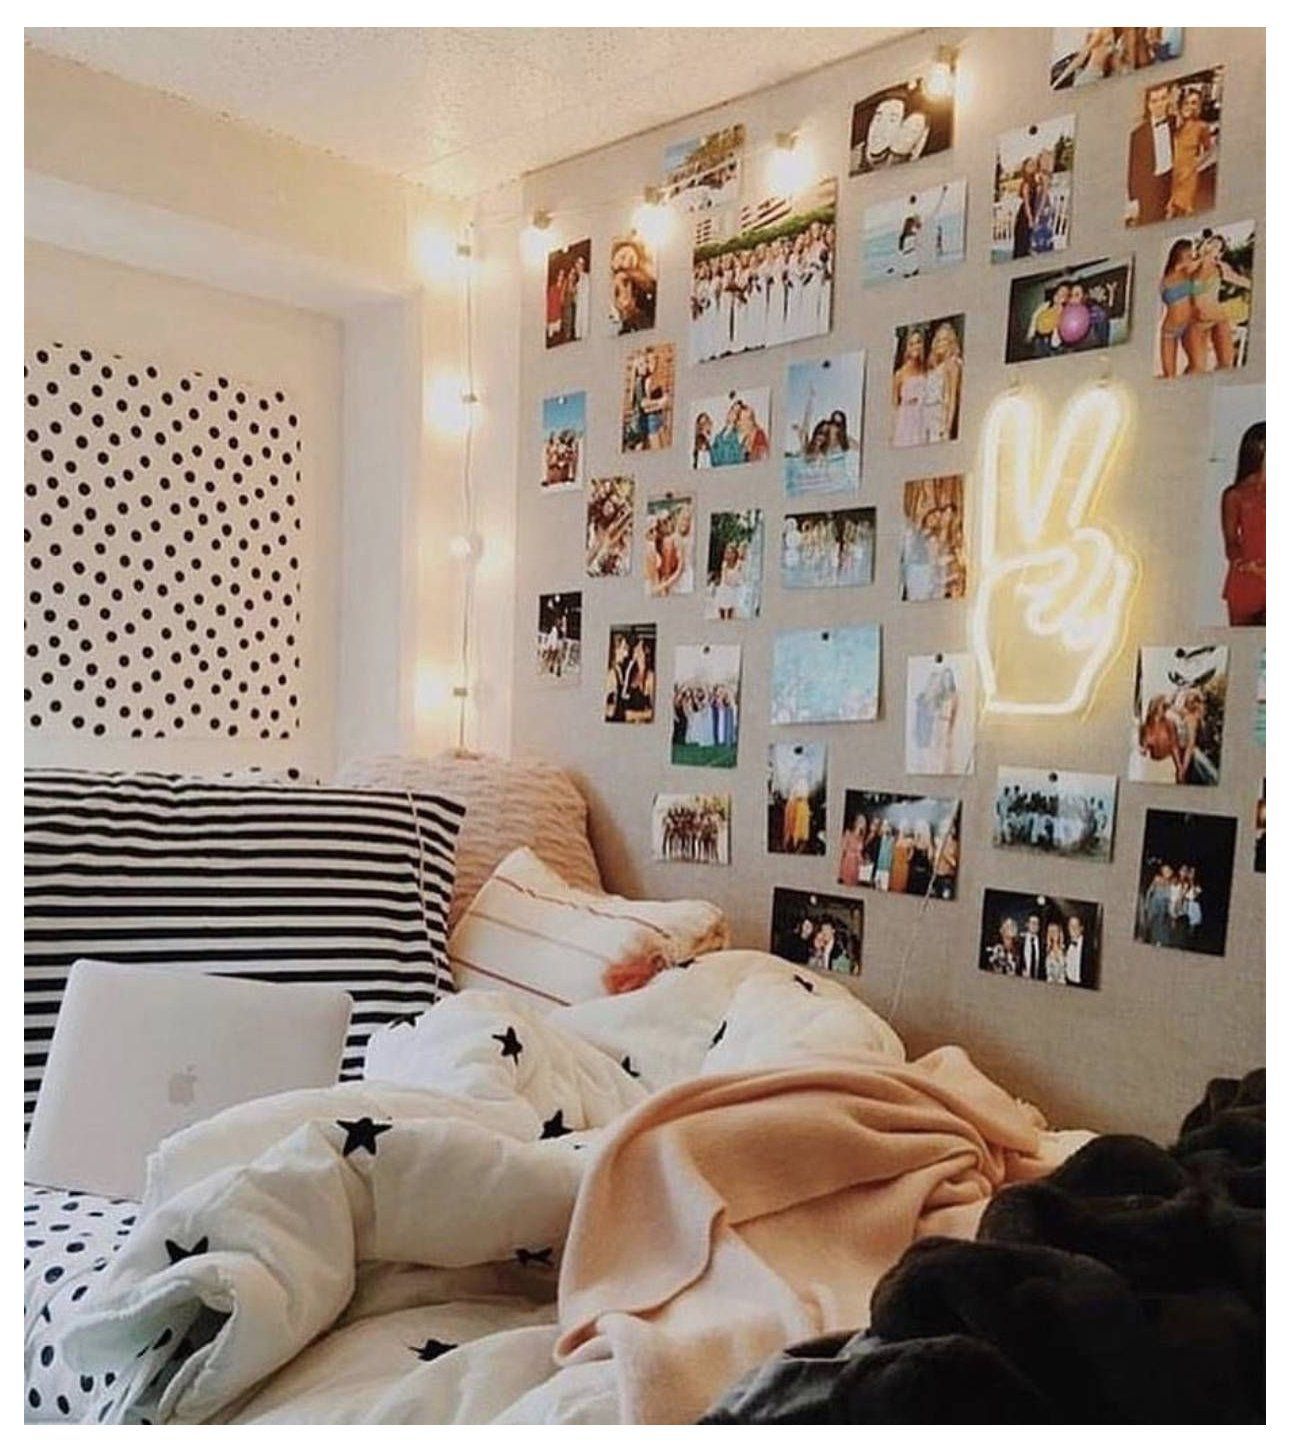 aesthetic bedroom ideas for teens - aesthetic bedroom ideas for teens -   23 room decor for teens ideas